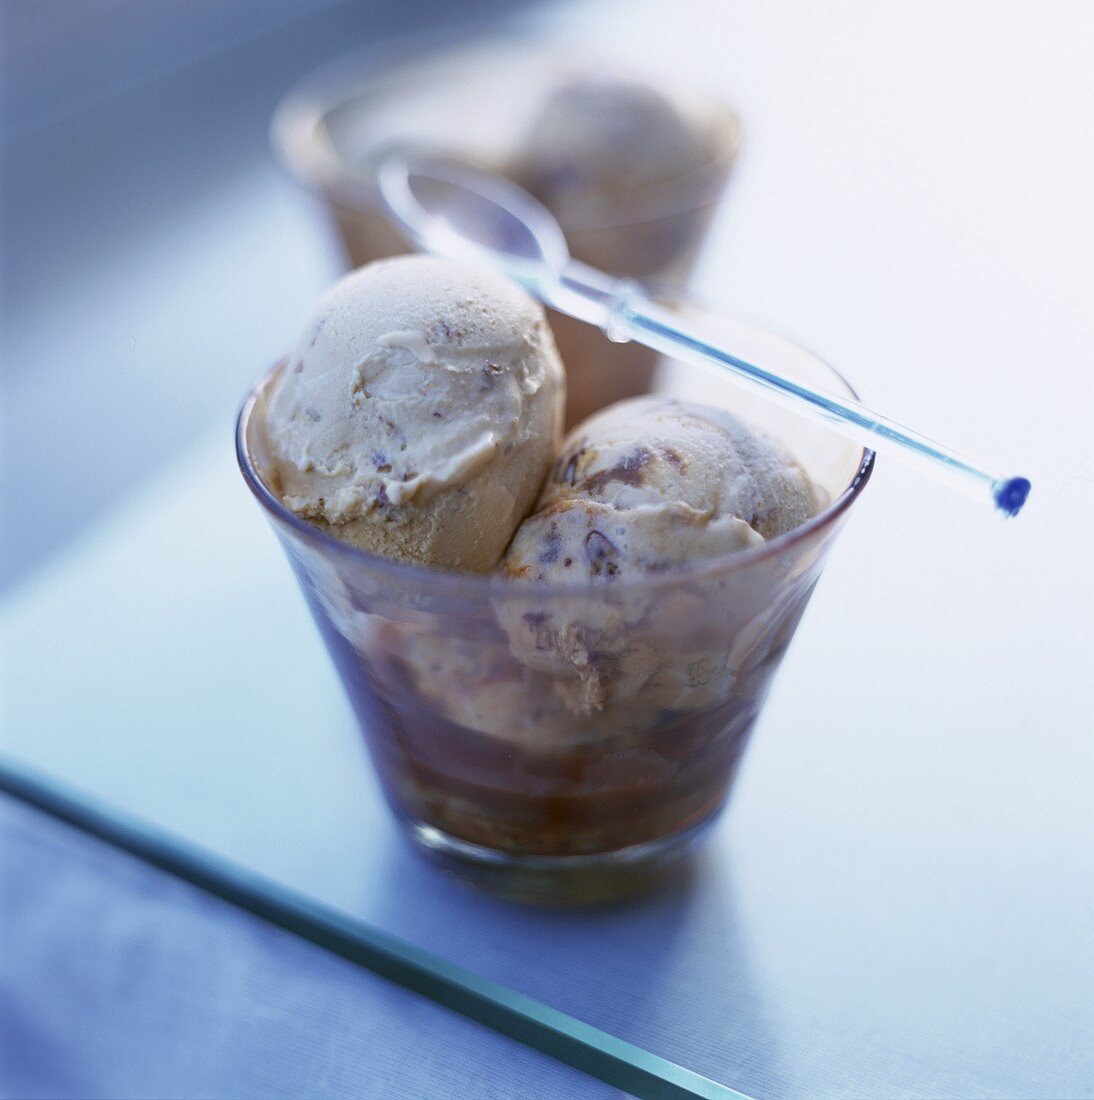 Walnut ice cream in small glass bowl